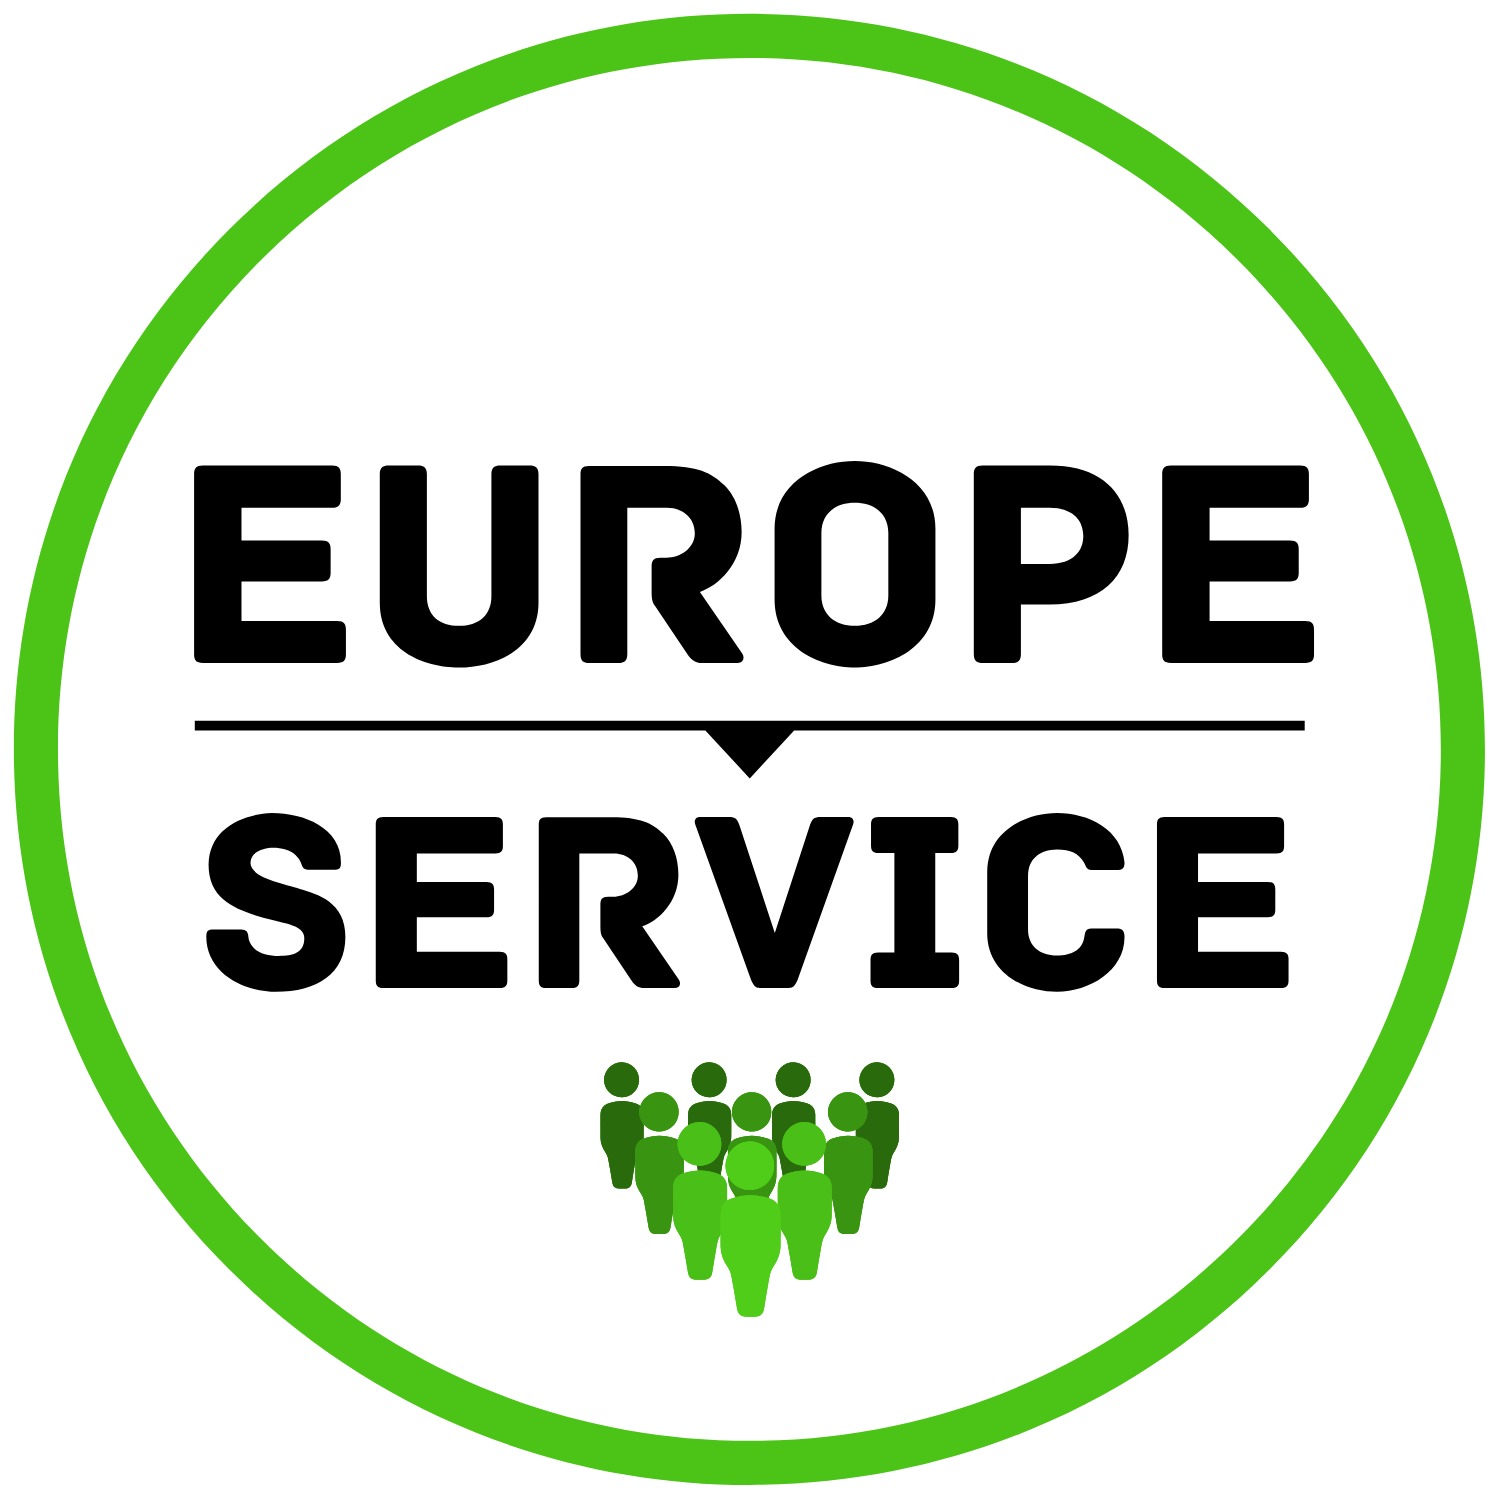 Europe service. European service.